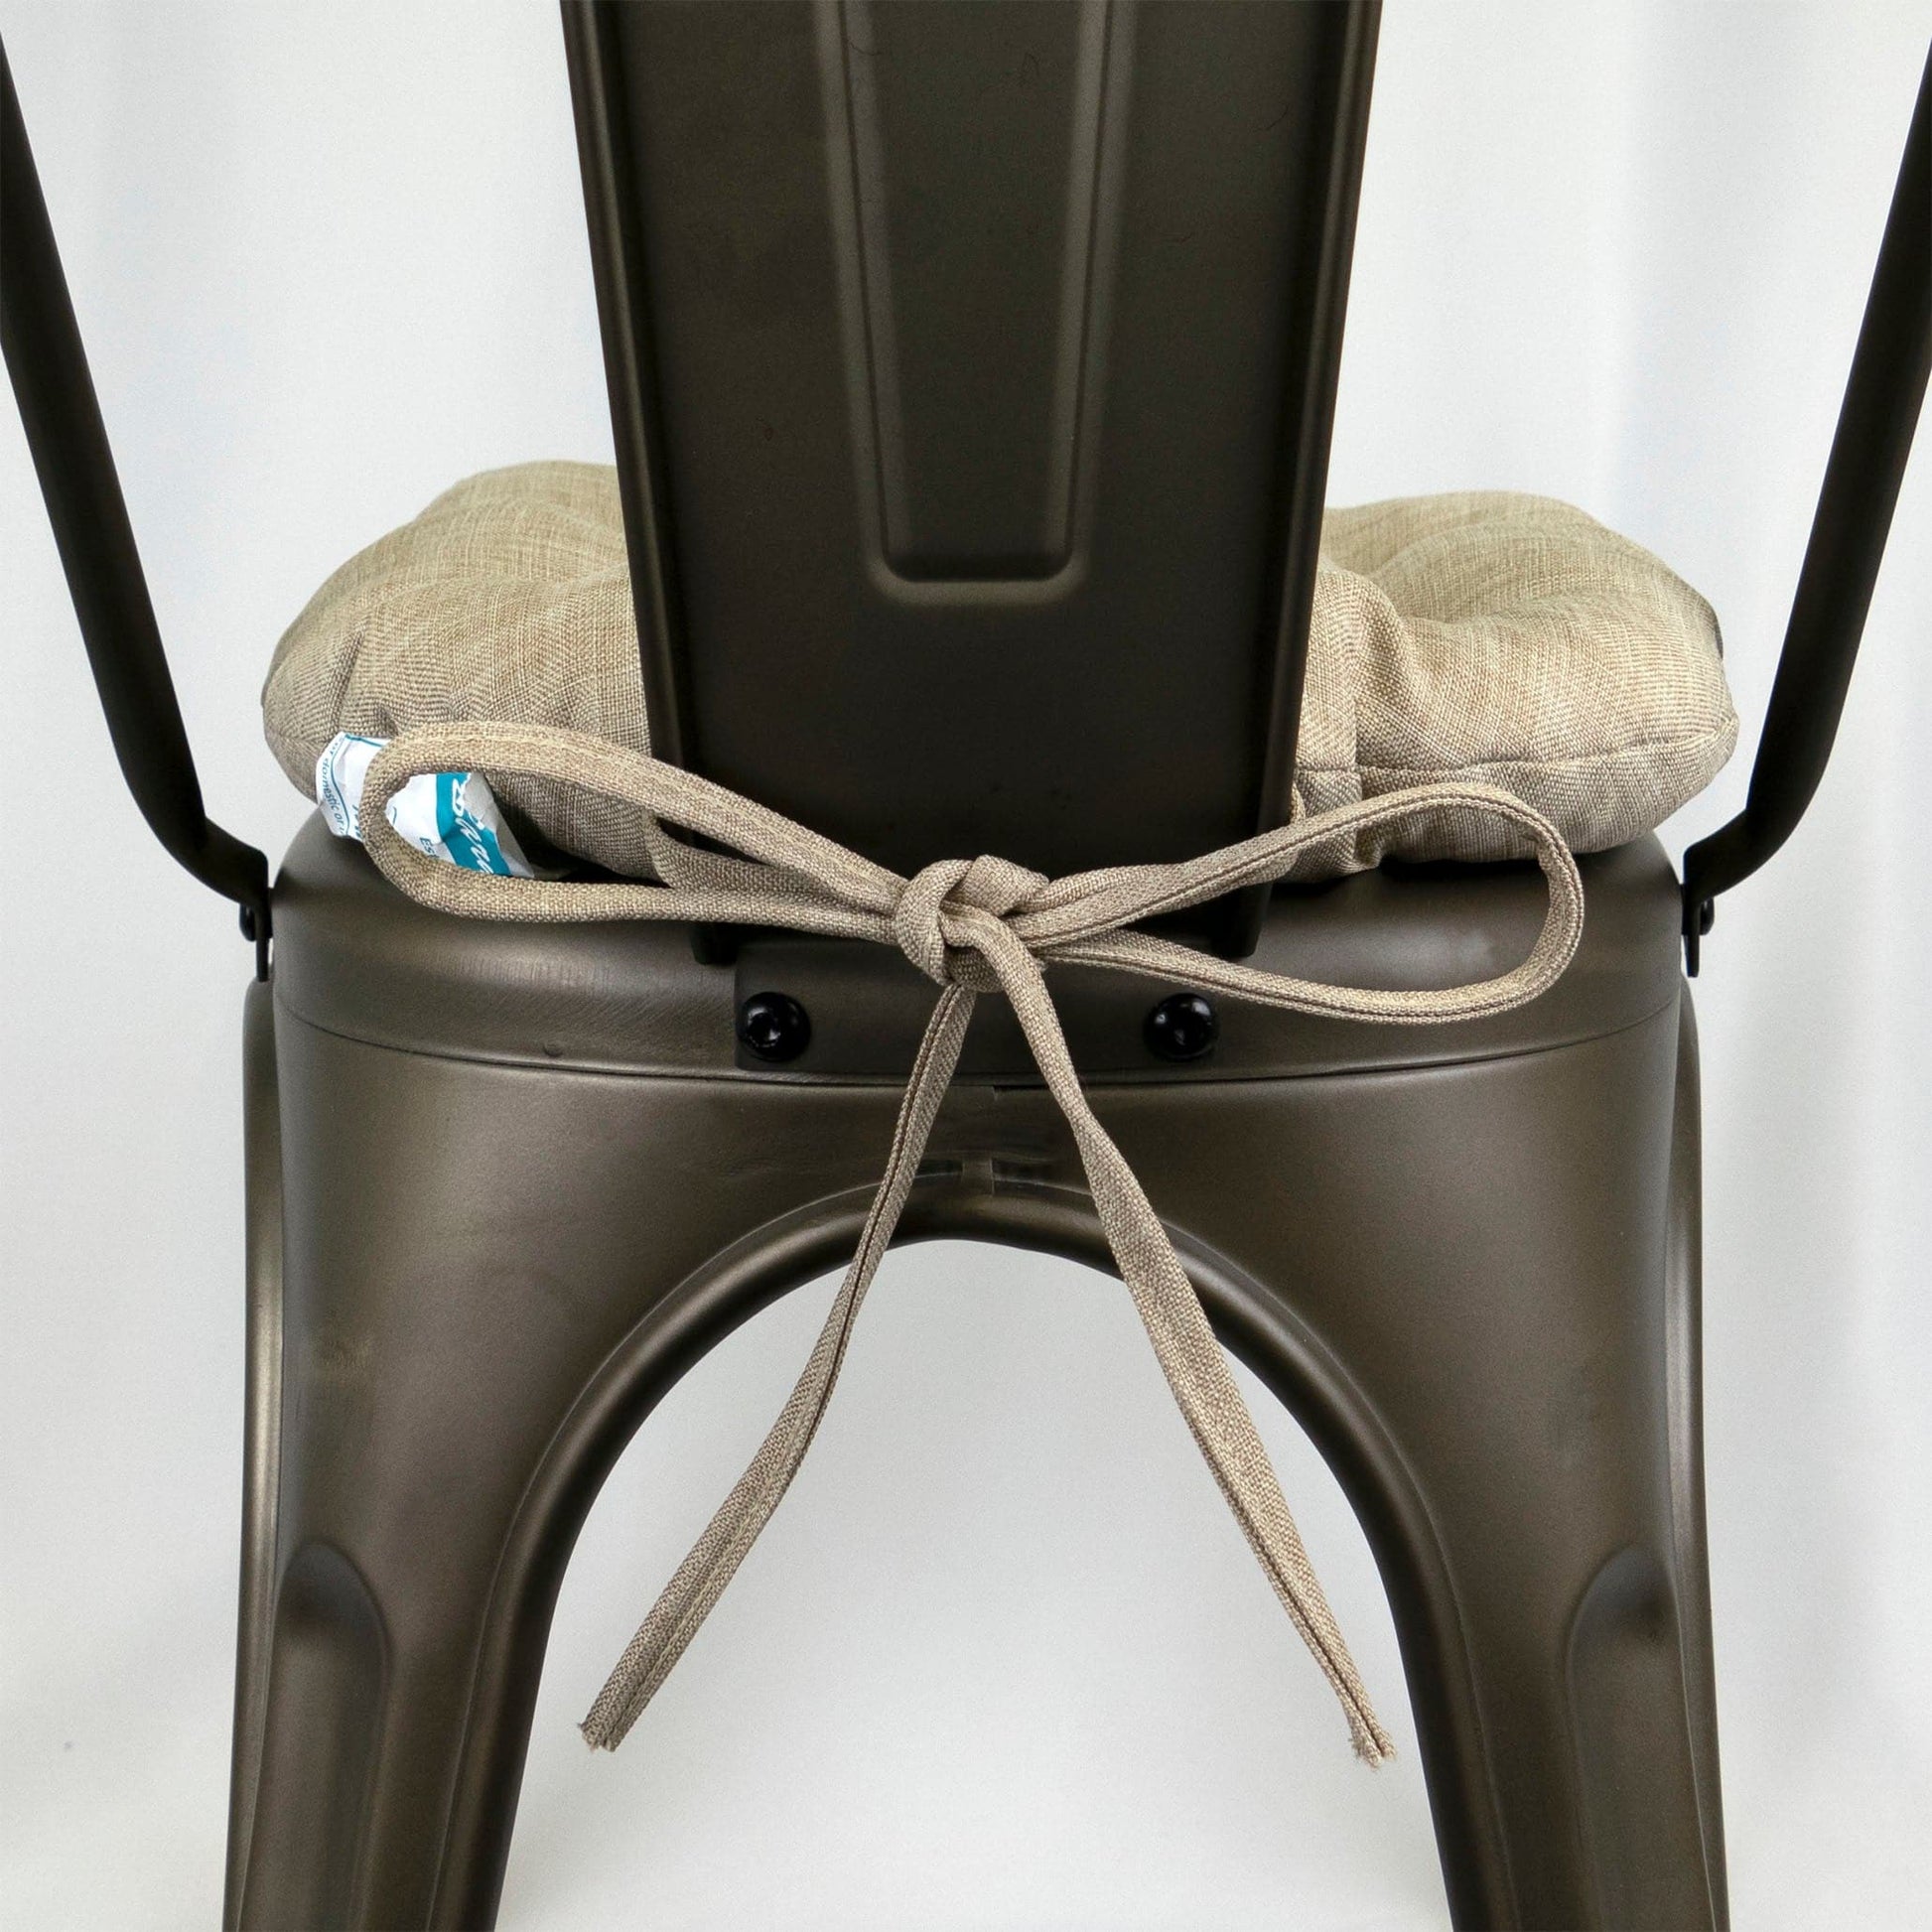 Hayden Beige Industrial Chair Cushion - Latex Foam Fill - Barnett Home Decor - Tan